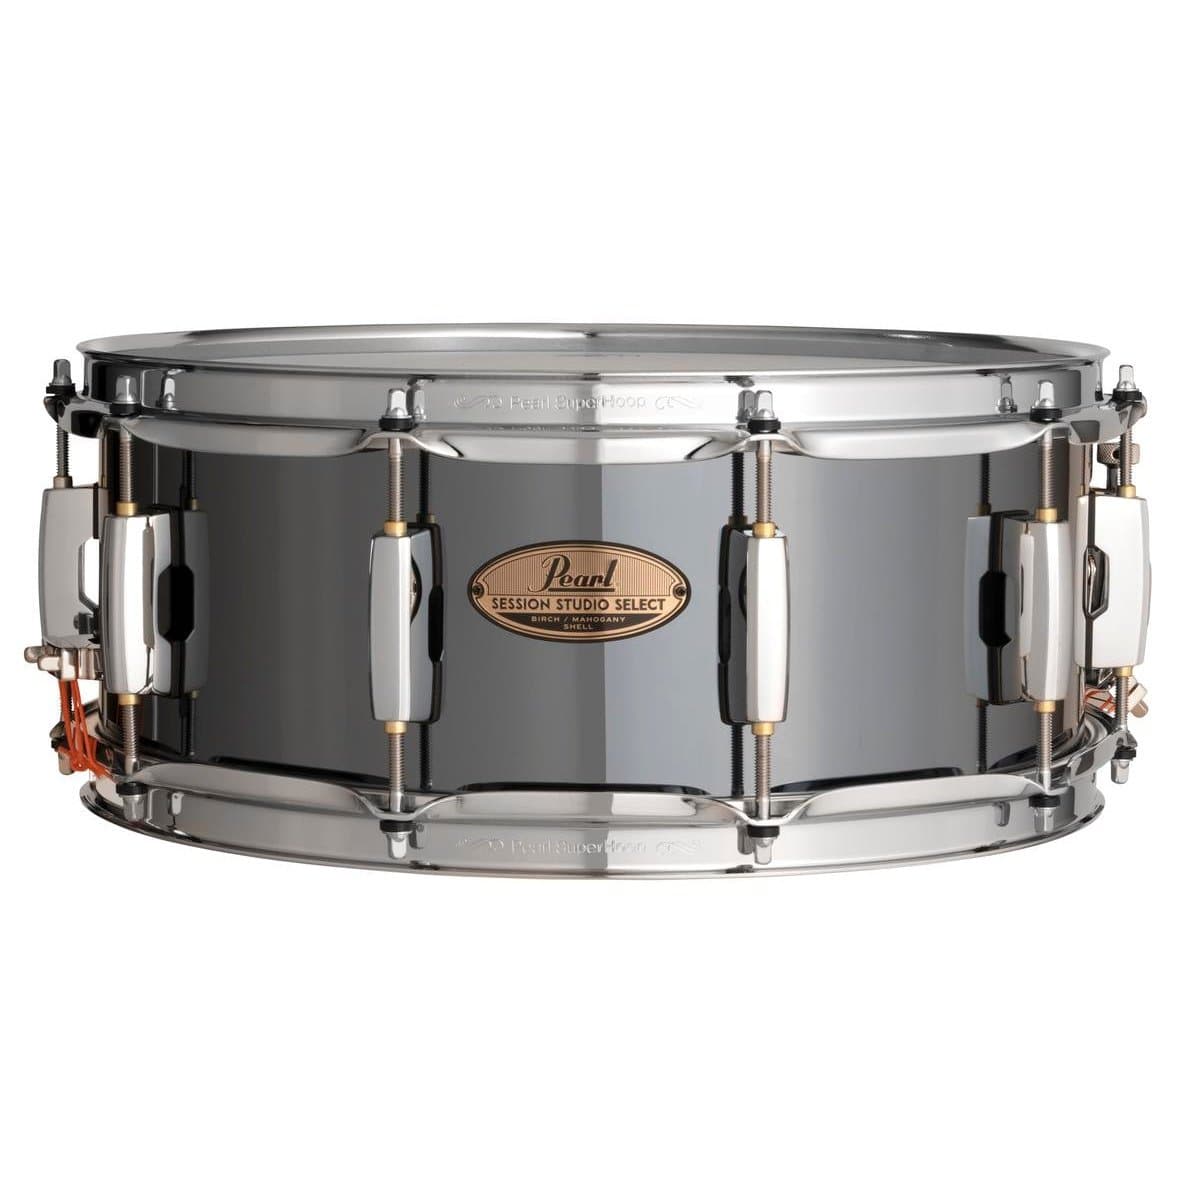 Pearl Session Studio Select 14x5.5 Snare Drum Black Chrome